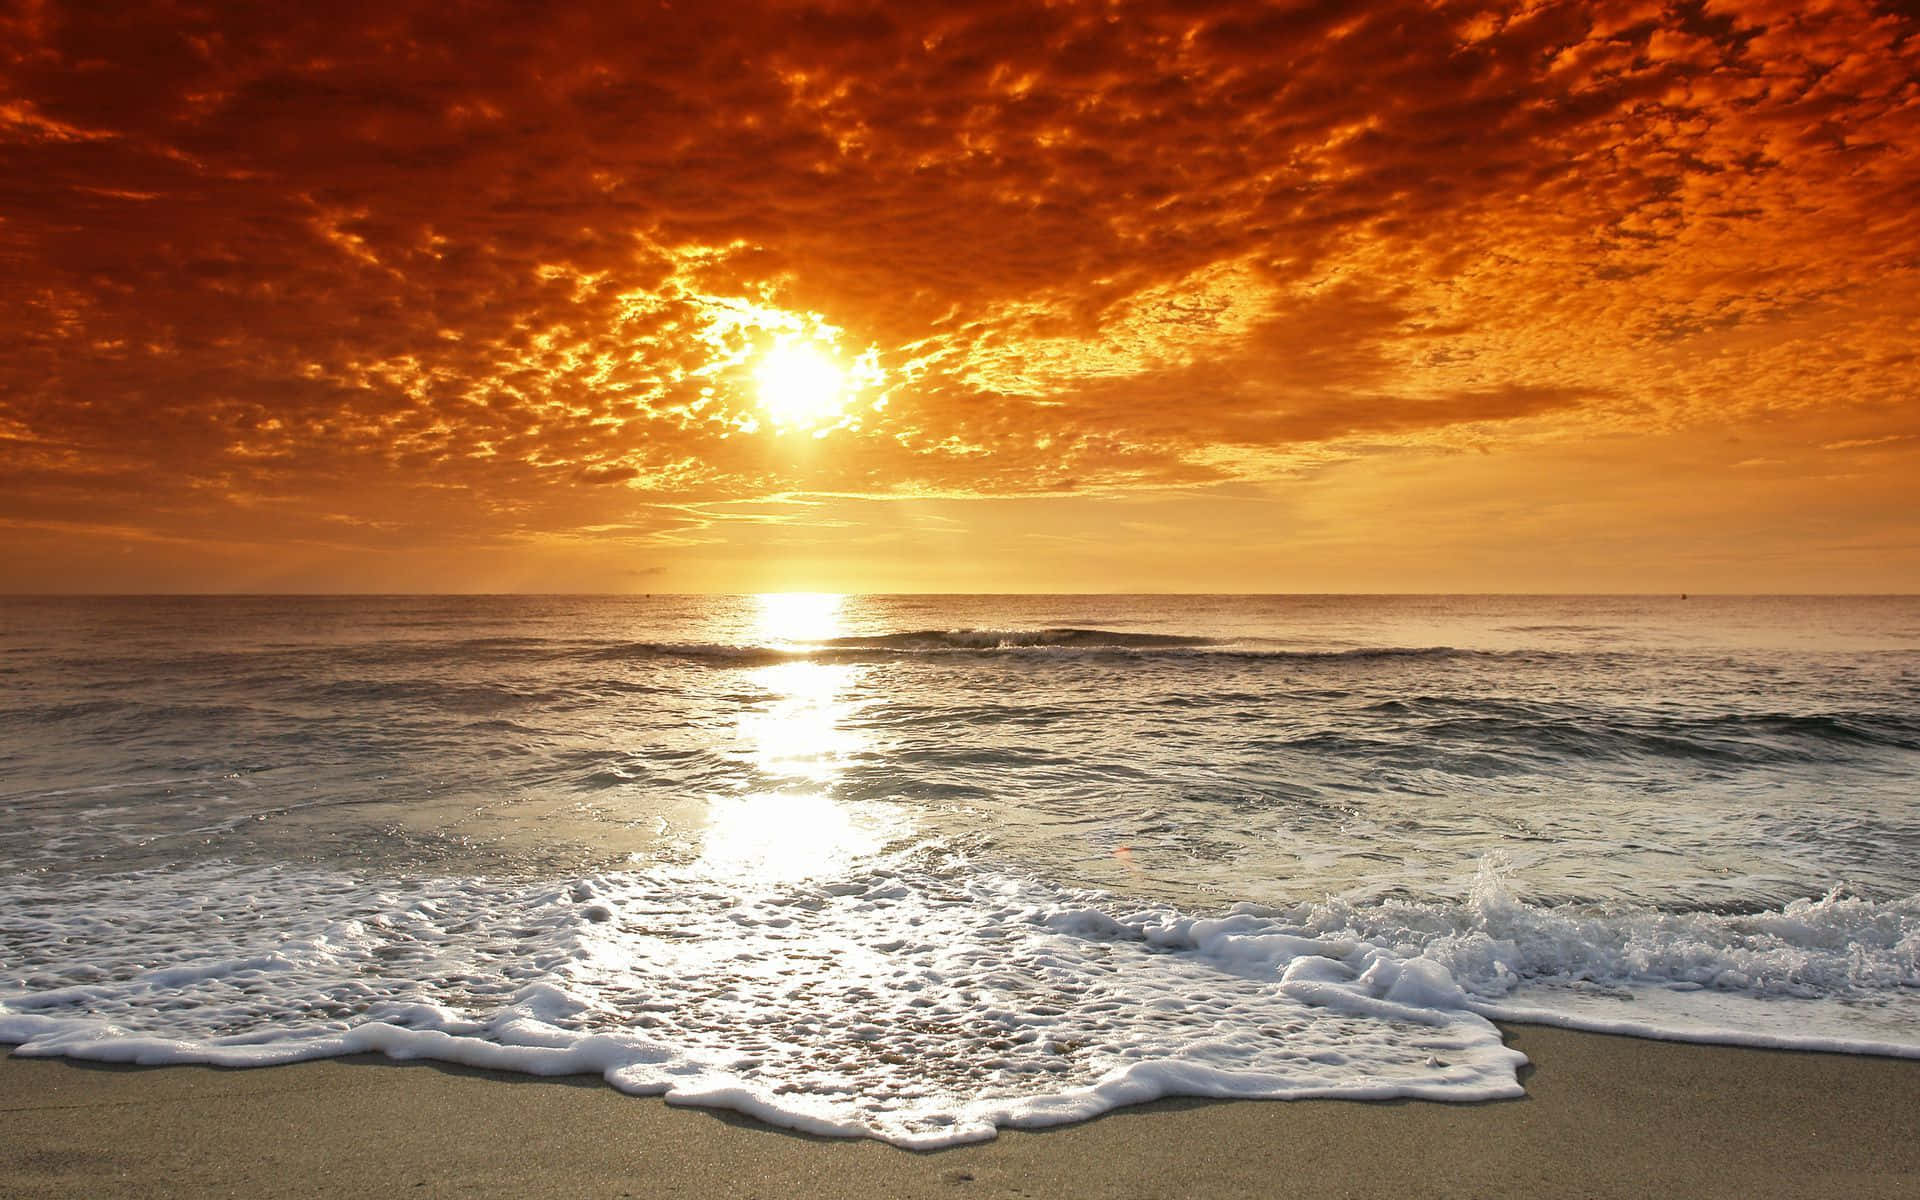 Take a moment to enjoy the beautiful beach sunset